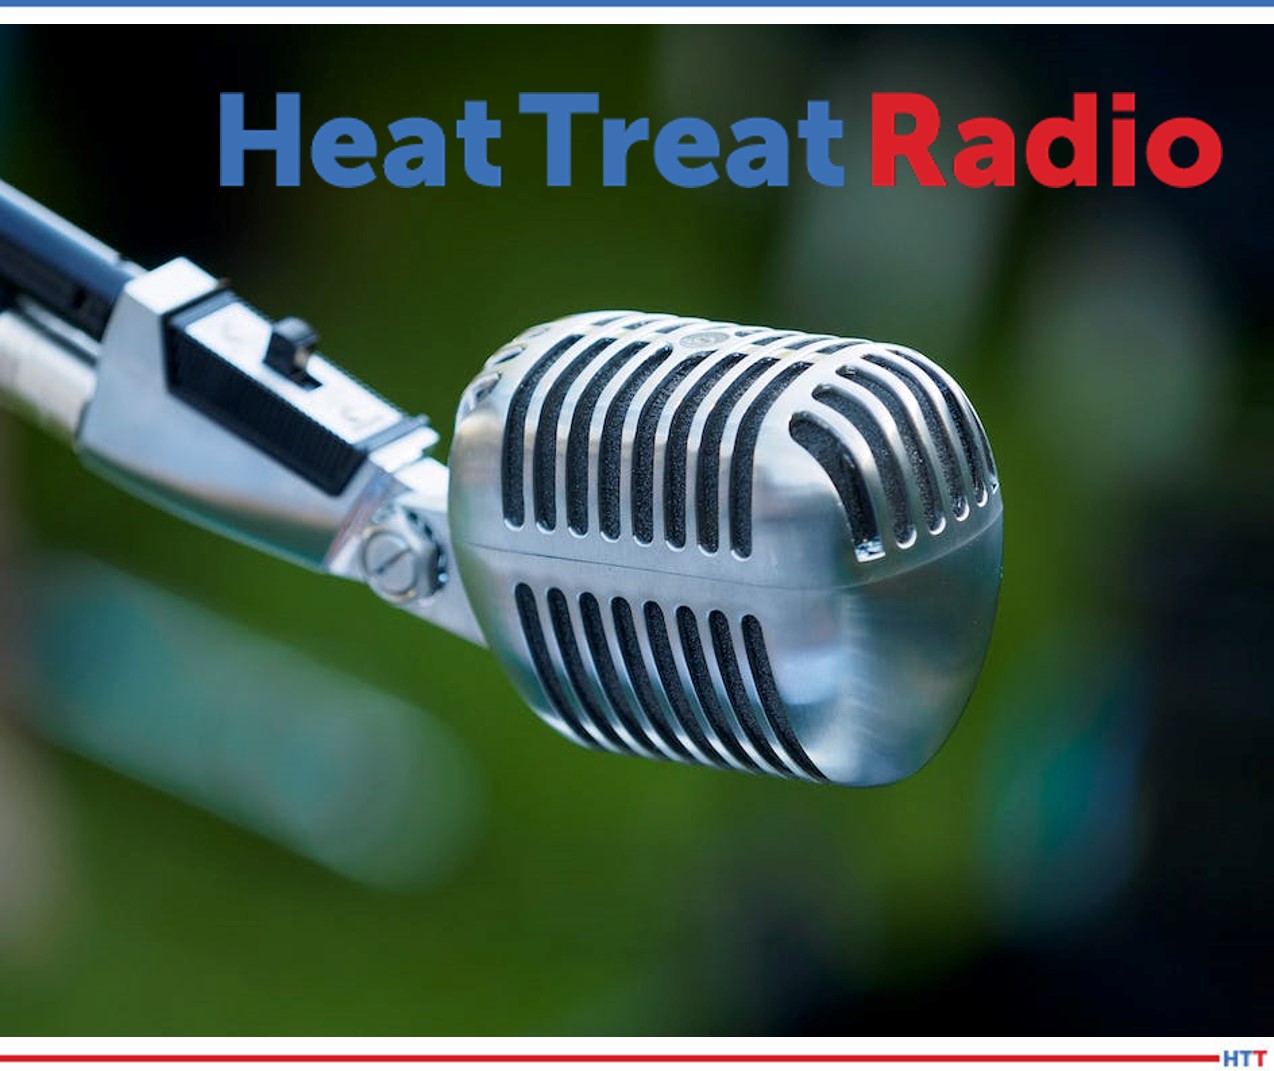 Radio microphone and Heat Treat Radio logo